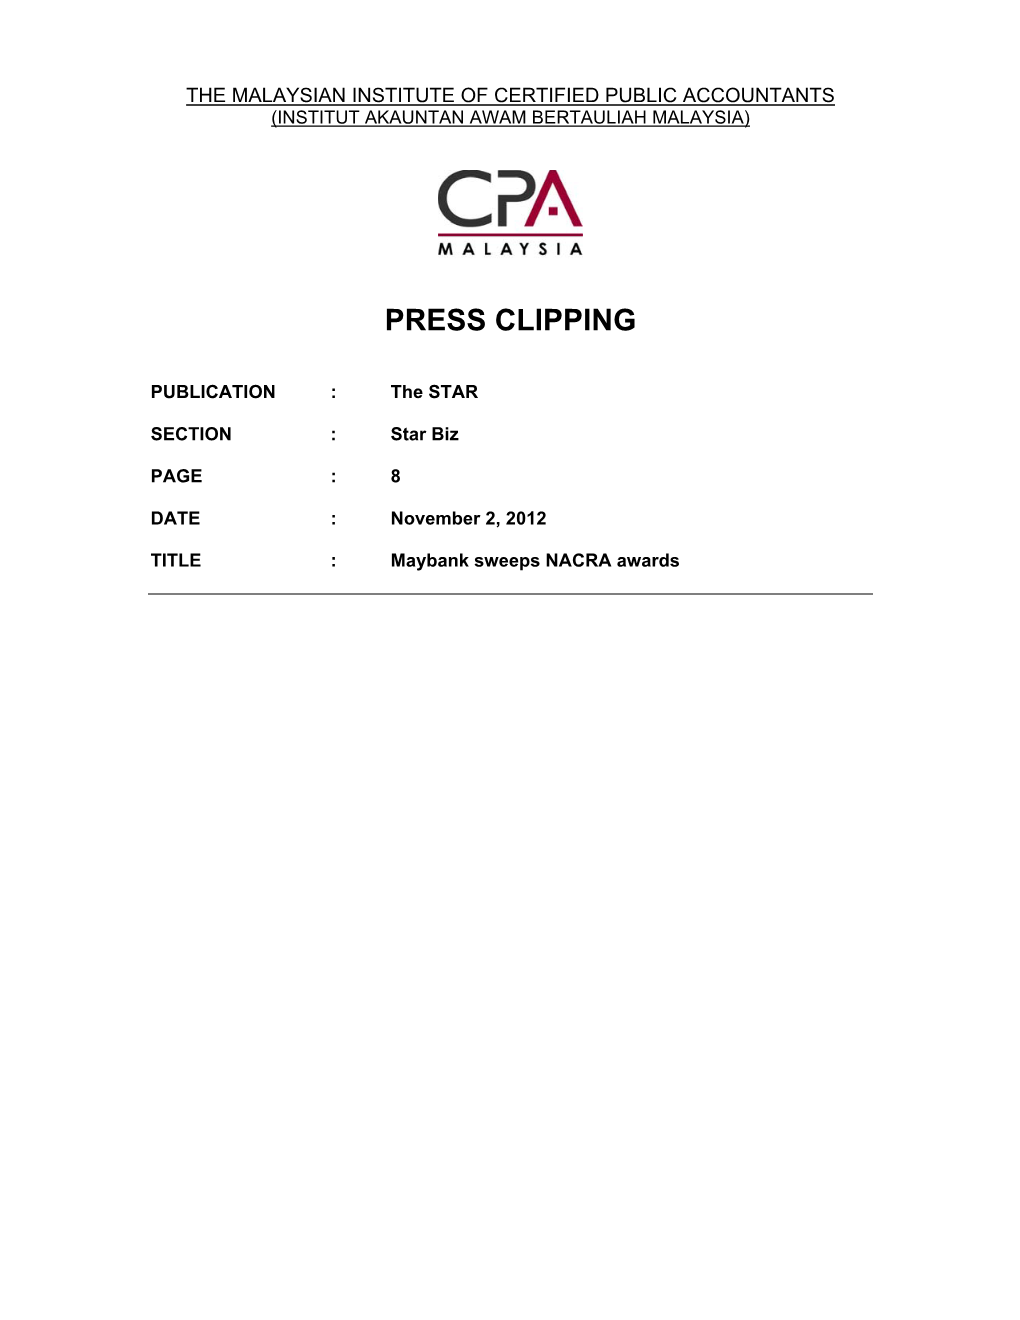 Press Clipping